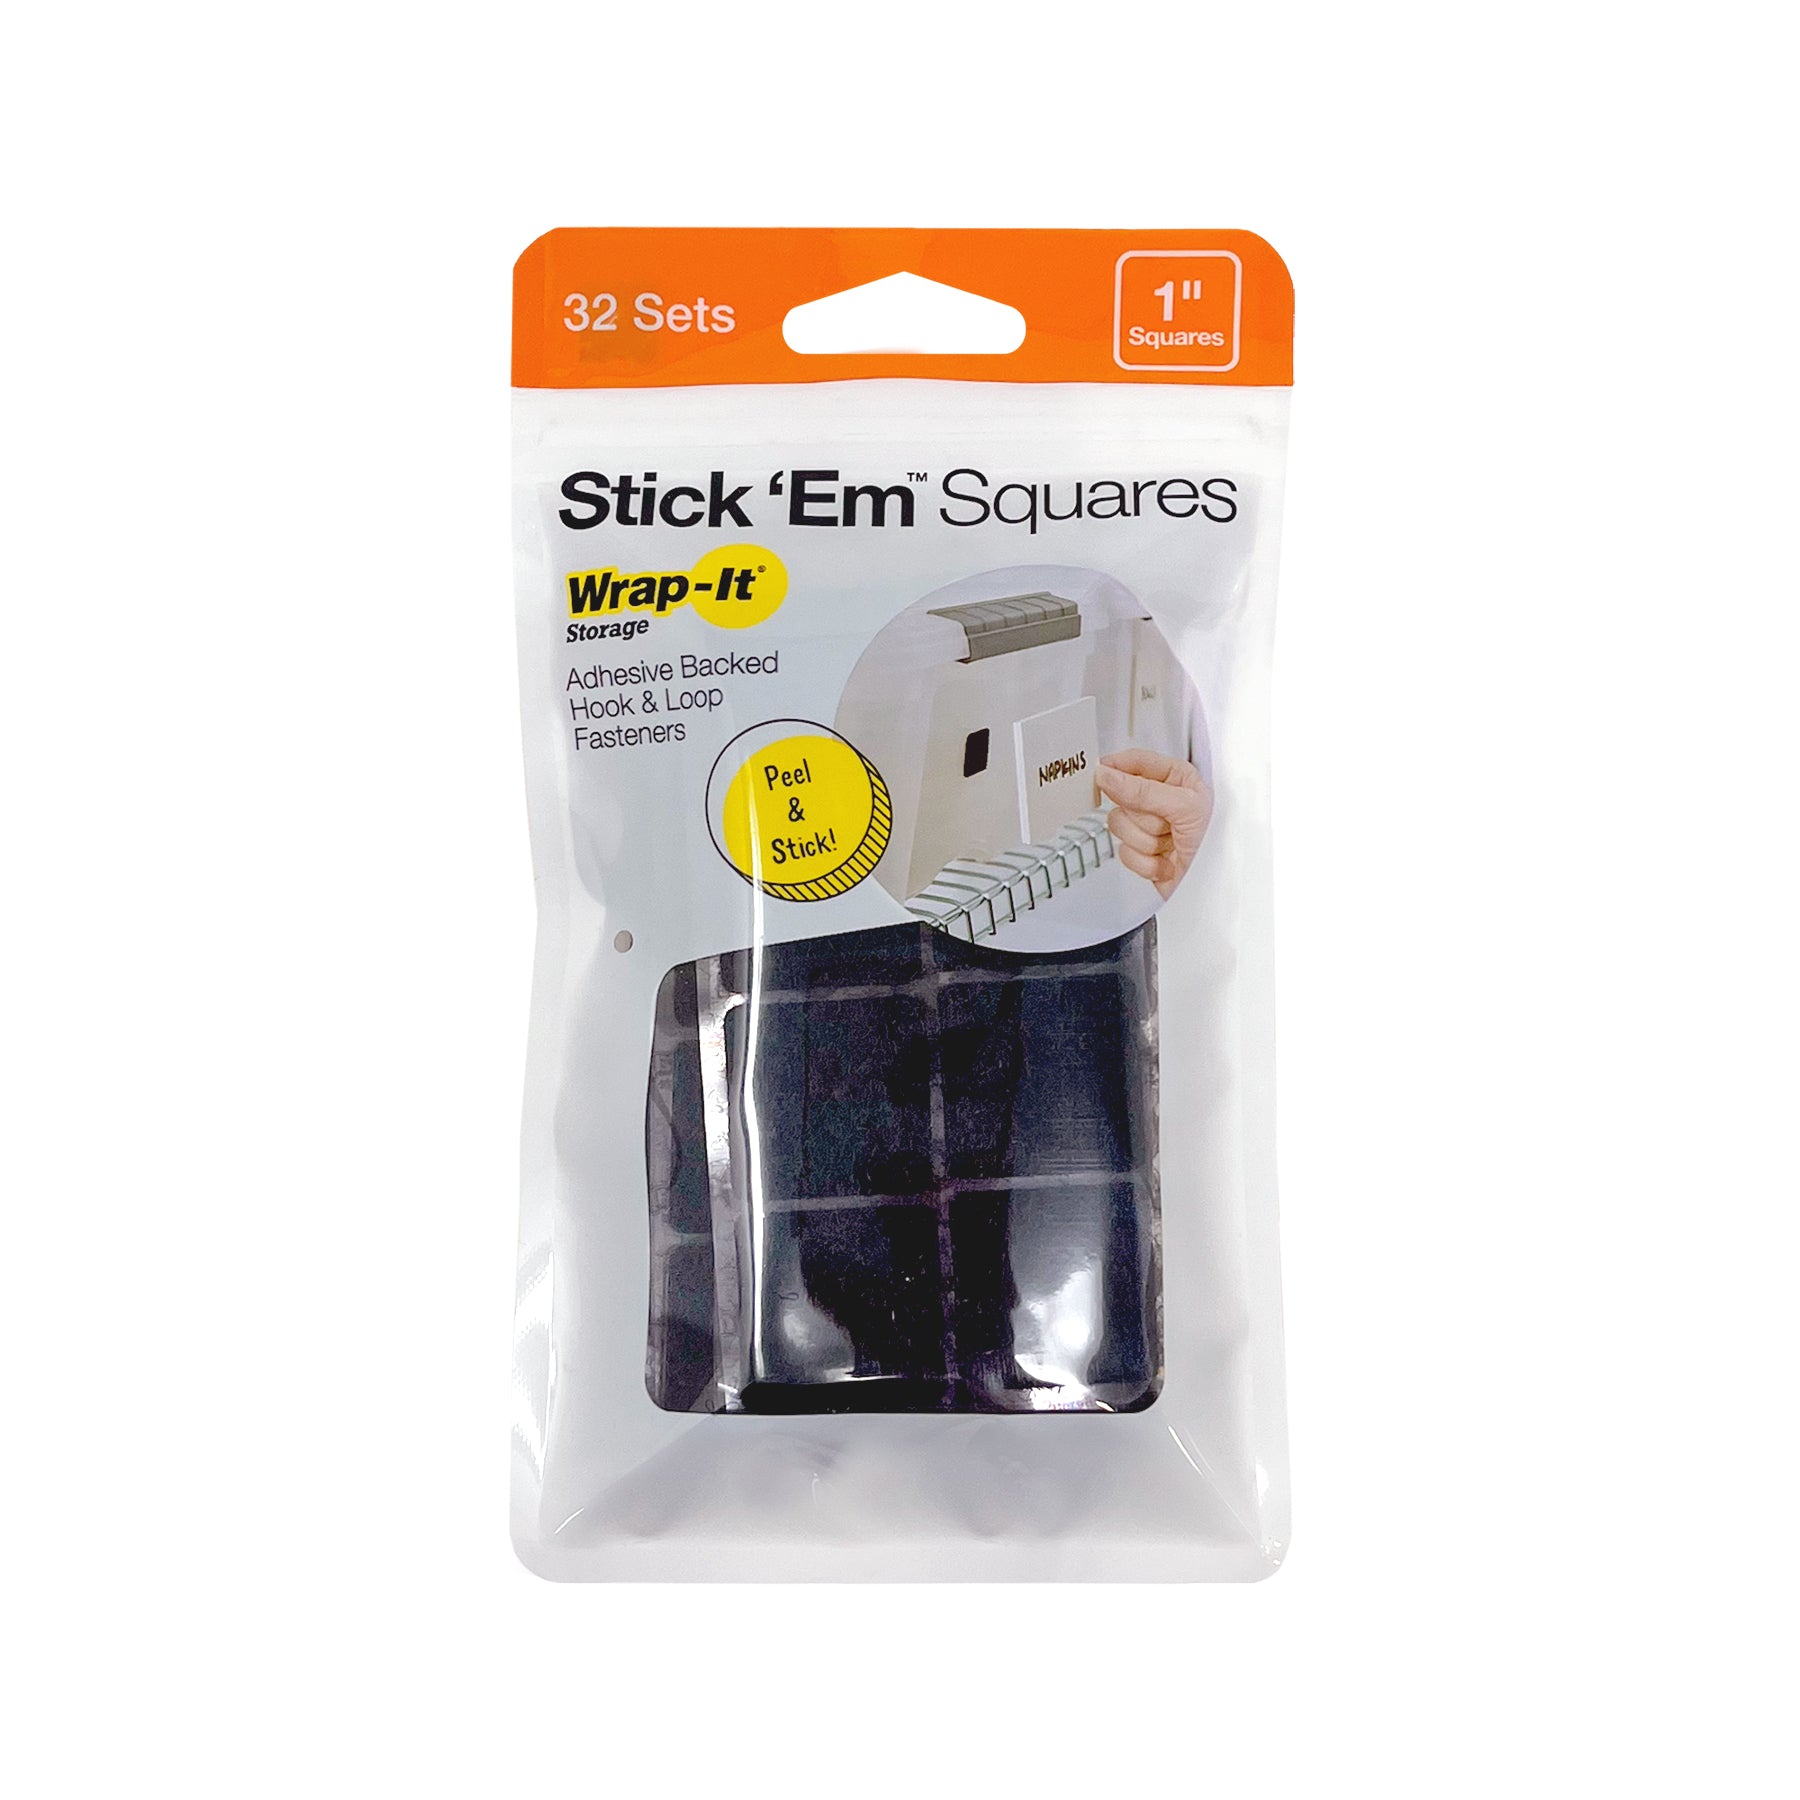 Stick 'Ems - 1" Dots (32-Sets) Black - Wrap-It Storage